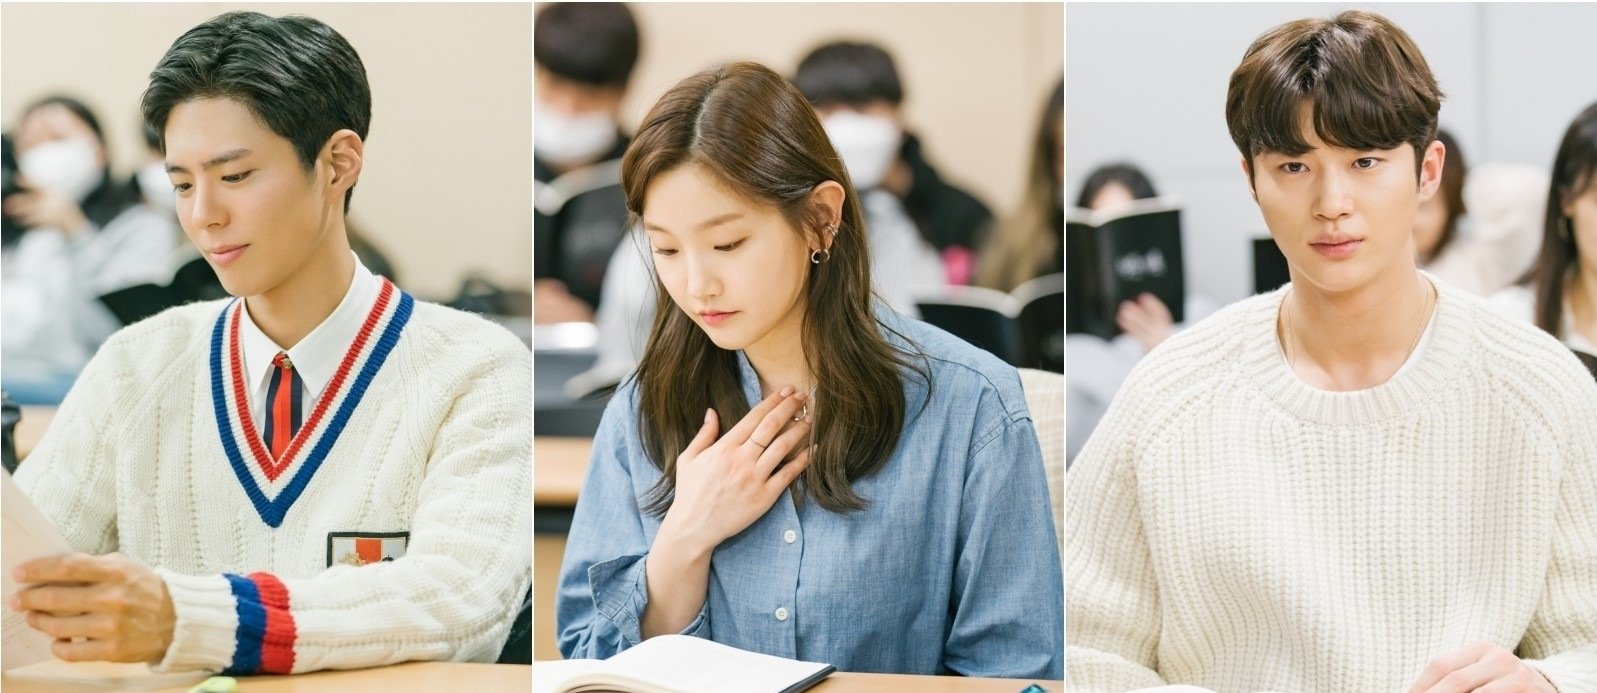 Park Bo-gum, Park So-dam, and Byeon Woo-seok's newest series will